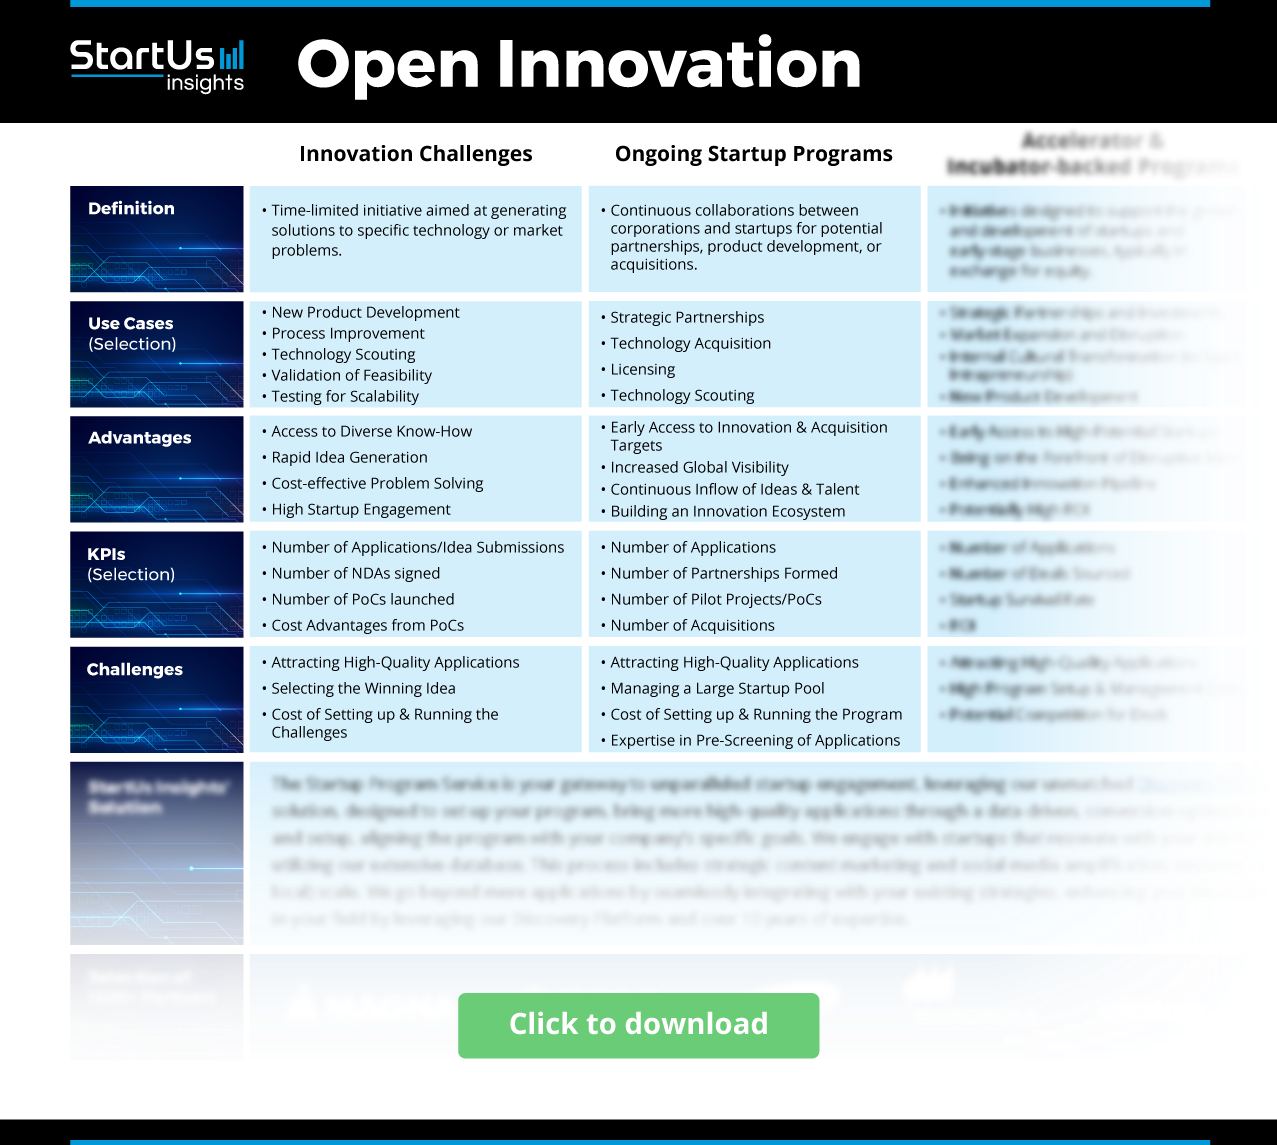 Open-Innovation-Blurred-Matrix-StartUs-Insights-noresize